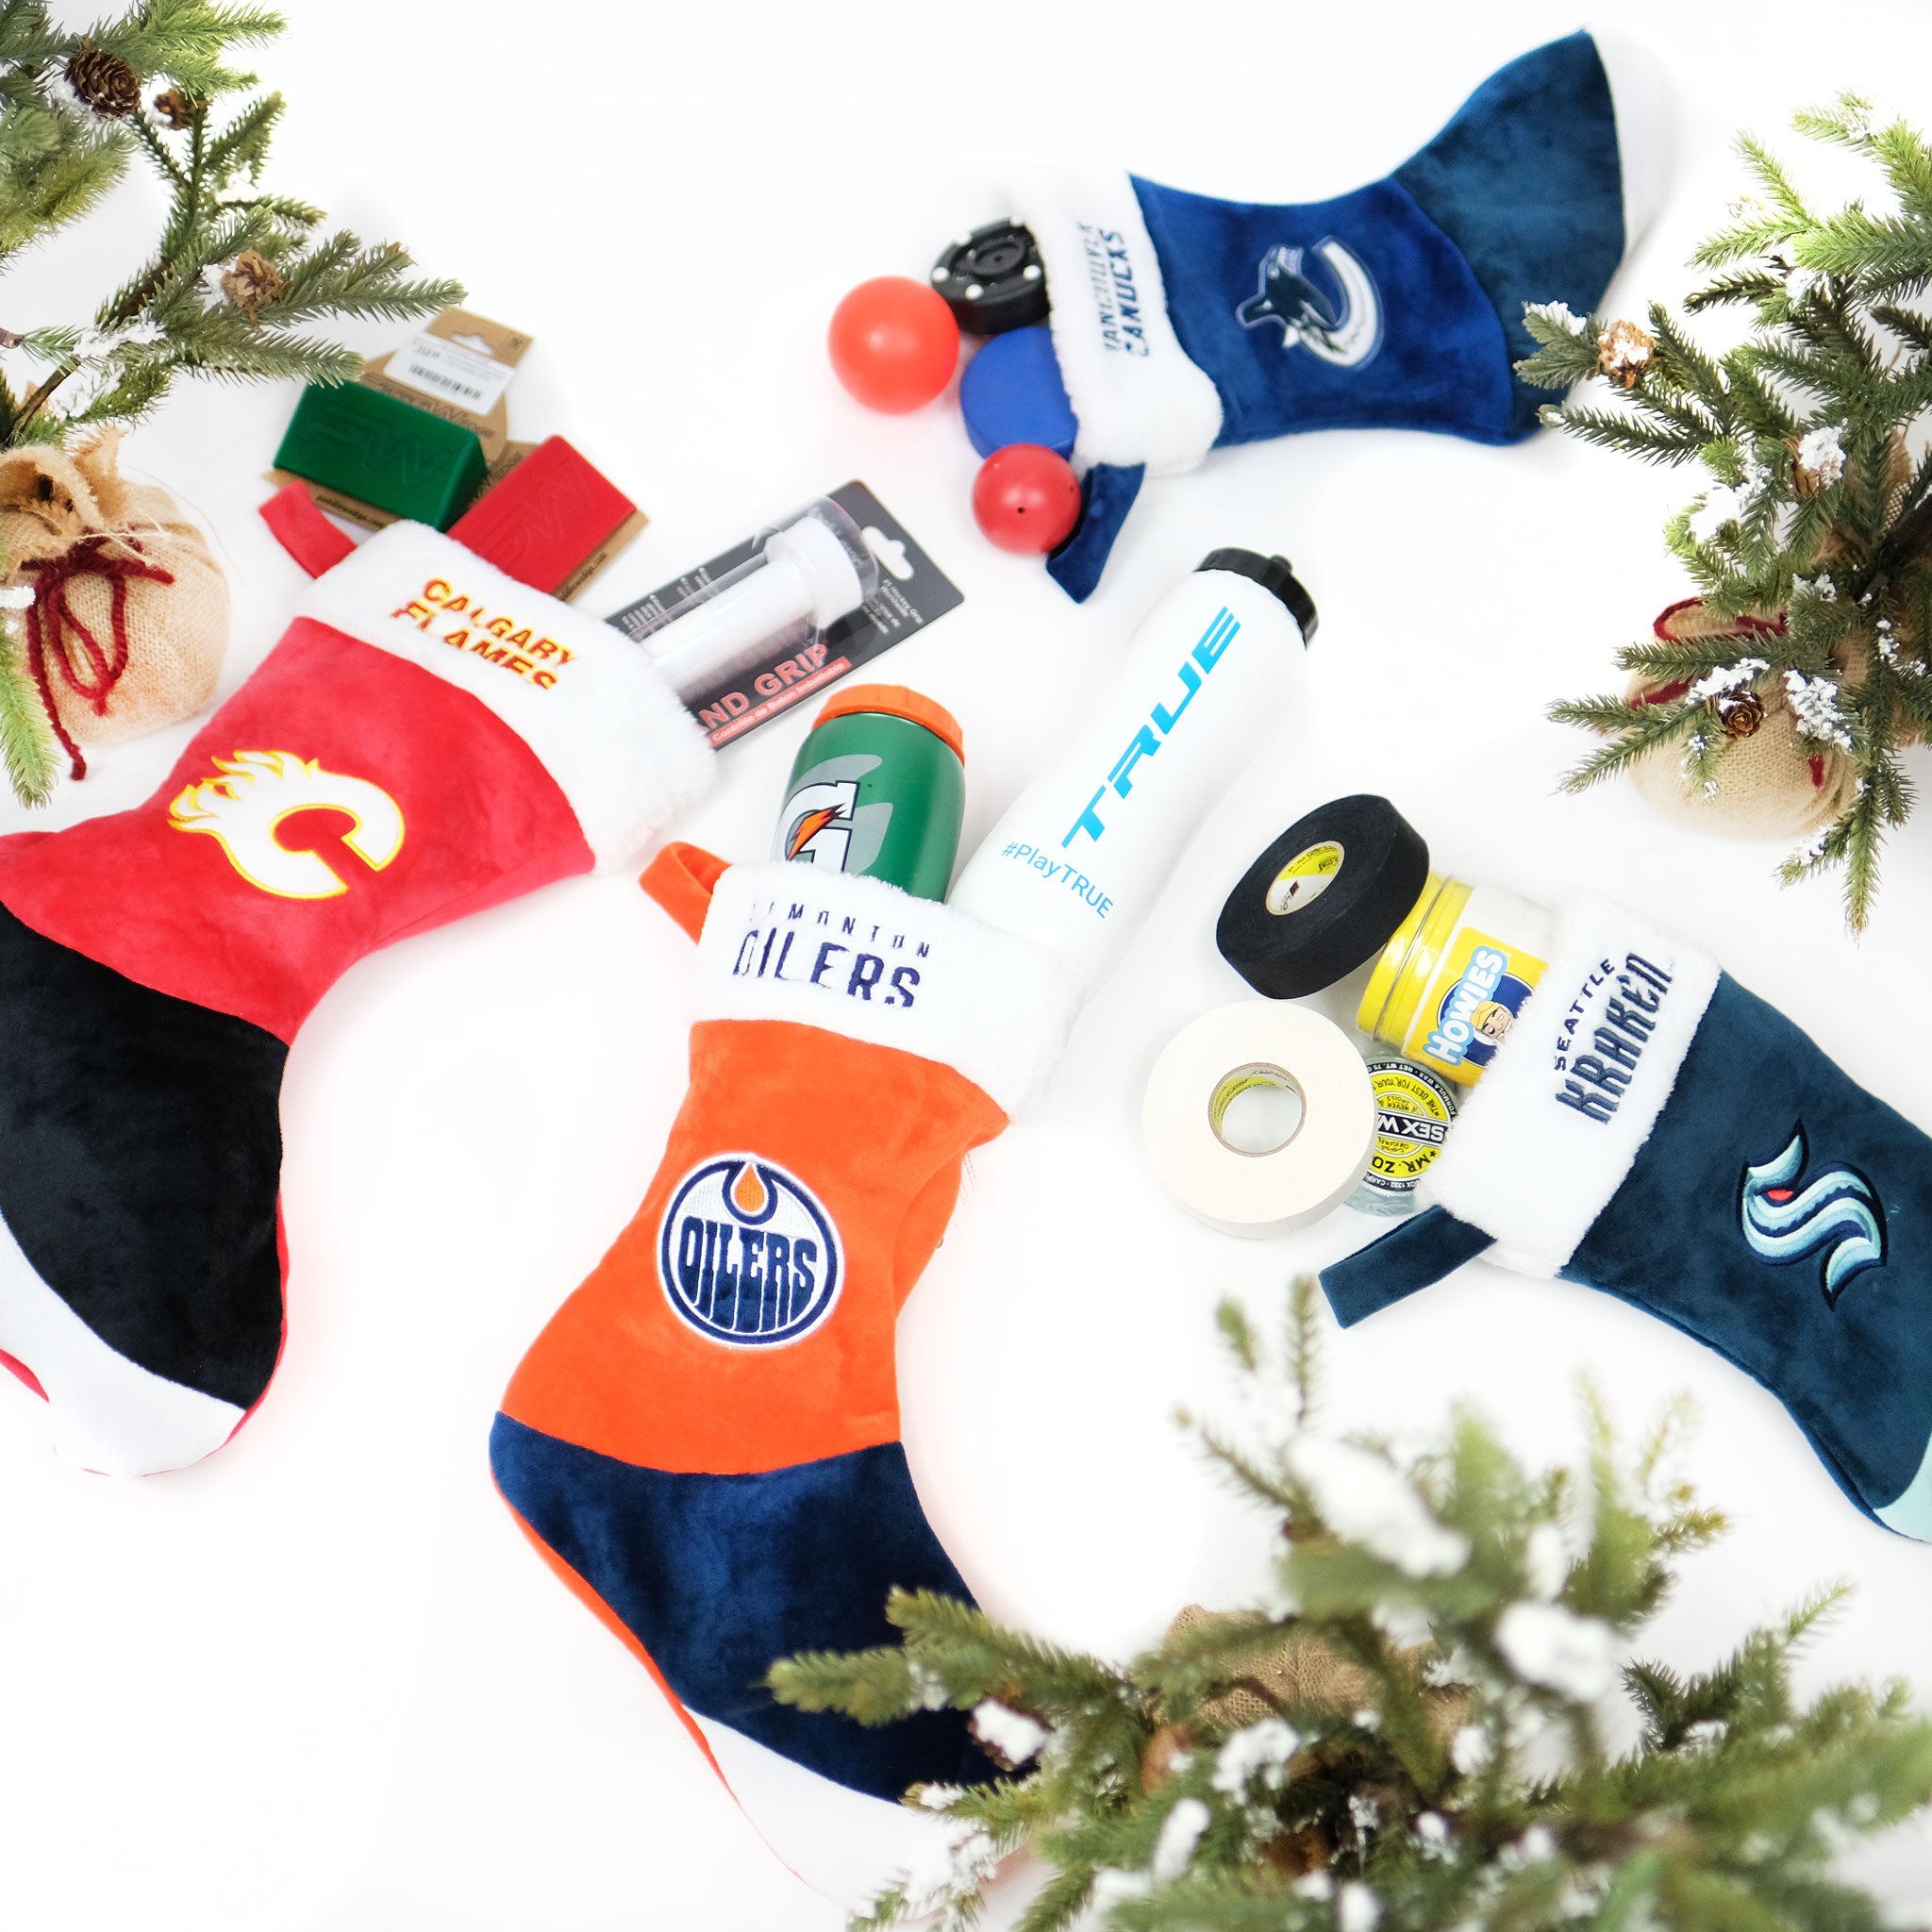 Hockey Gifts for the 2015 Holiday Season